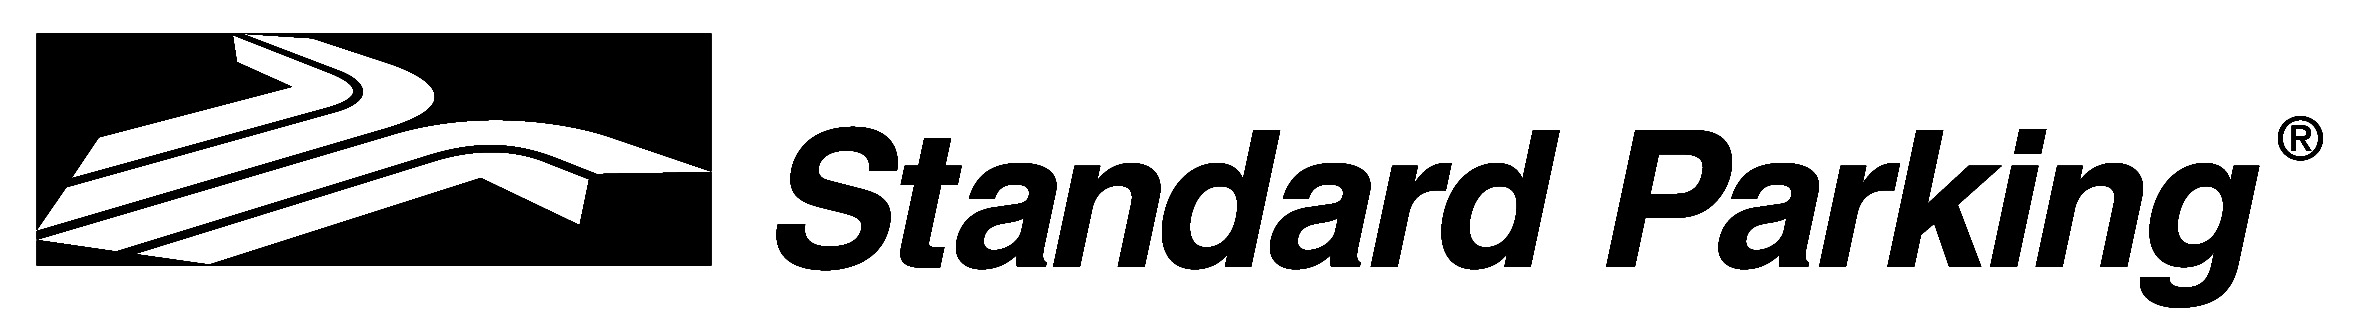 Standard Parking Corporation Logo